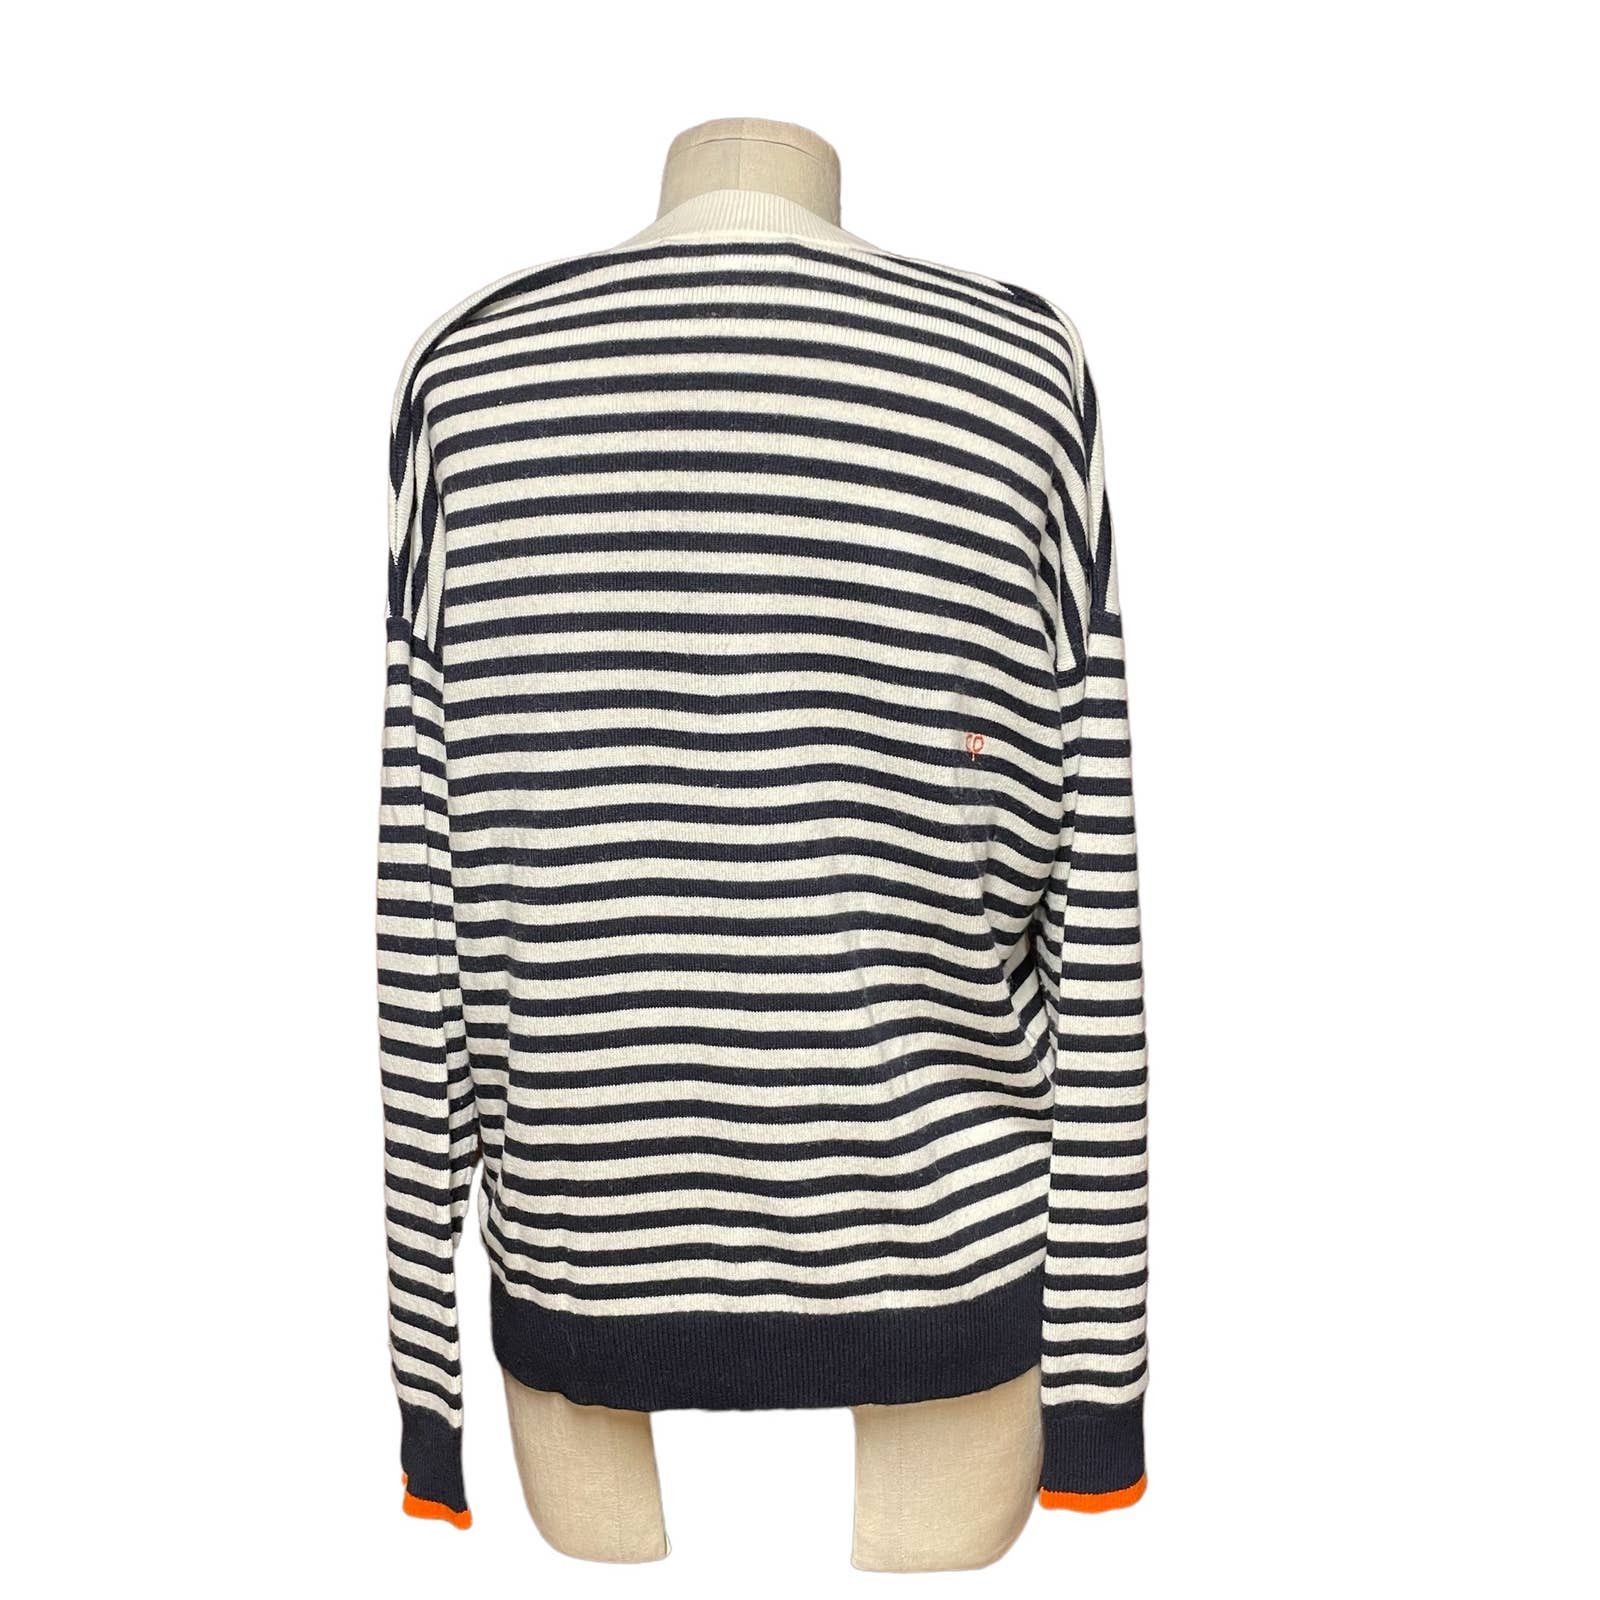 Chinti and Parker Chinti & Parker Navy Blue Cream Stripe Wool Cashmere Sweater Size M / US 6-8 / IT 42-44 - 6 Thumbnail